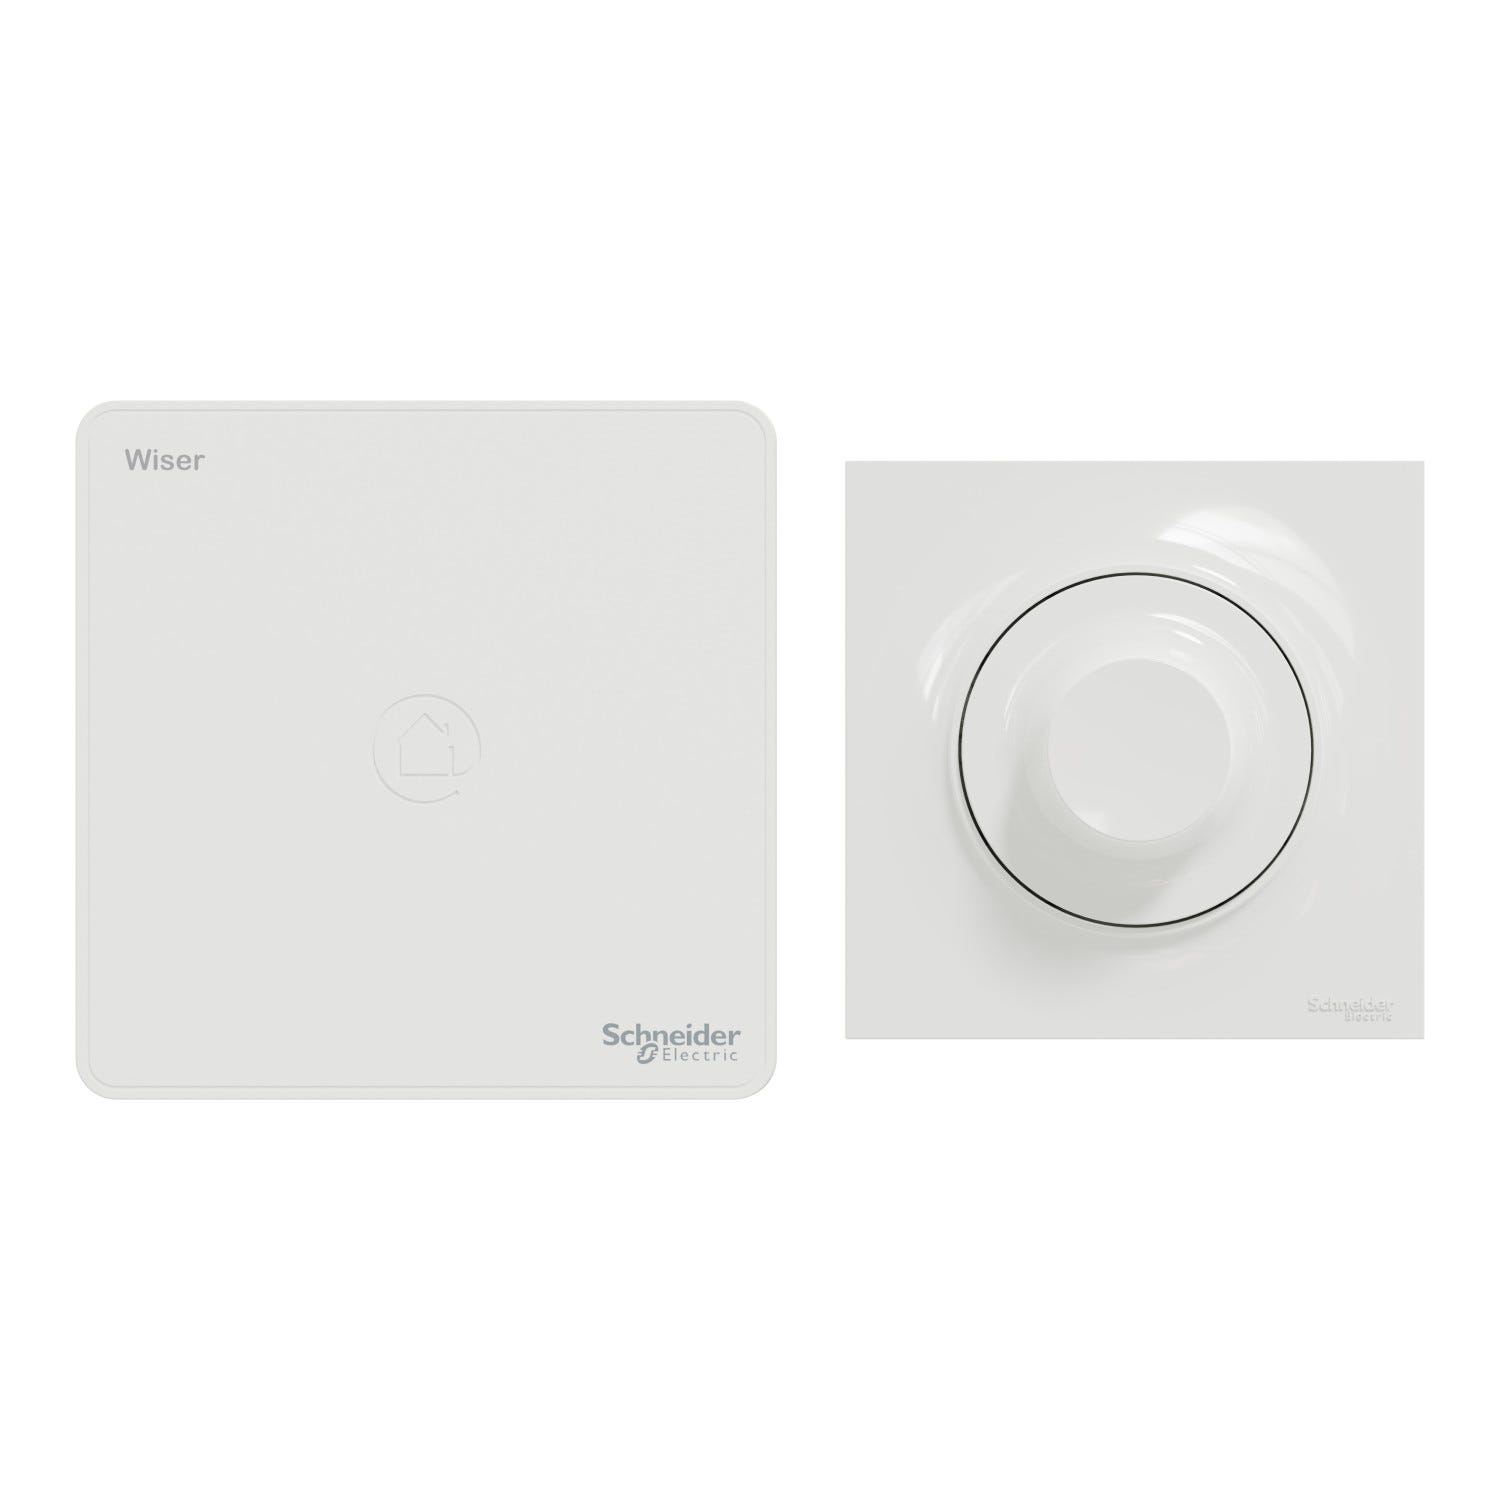 Kit d'éclairage blanc variateur + passerelle Wifi | Wiser Odace Schneider Electric CCTFR5201 3